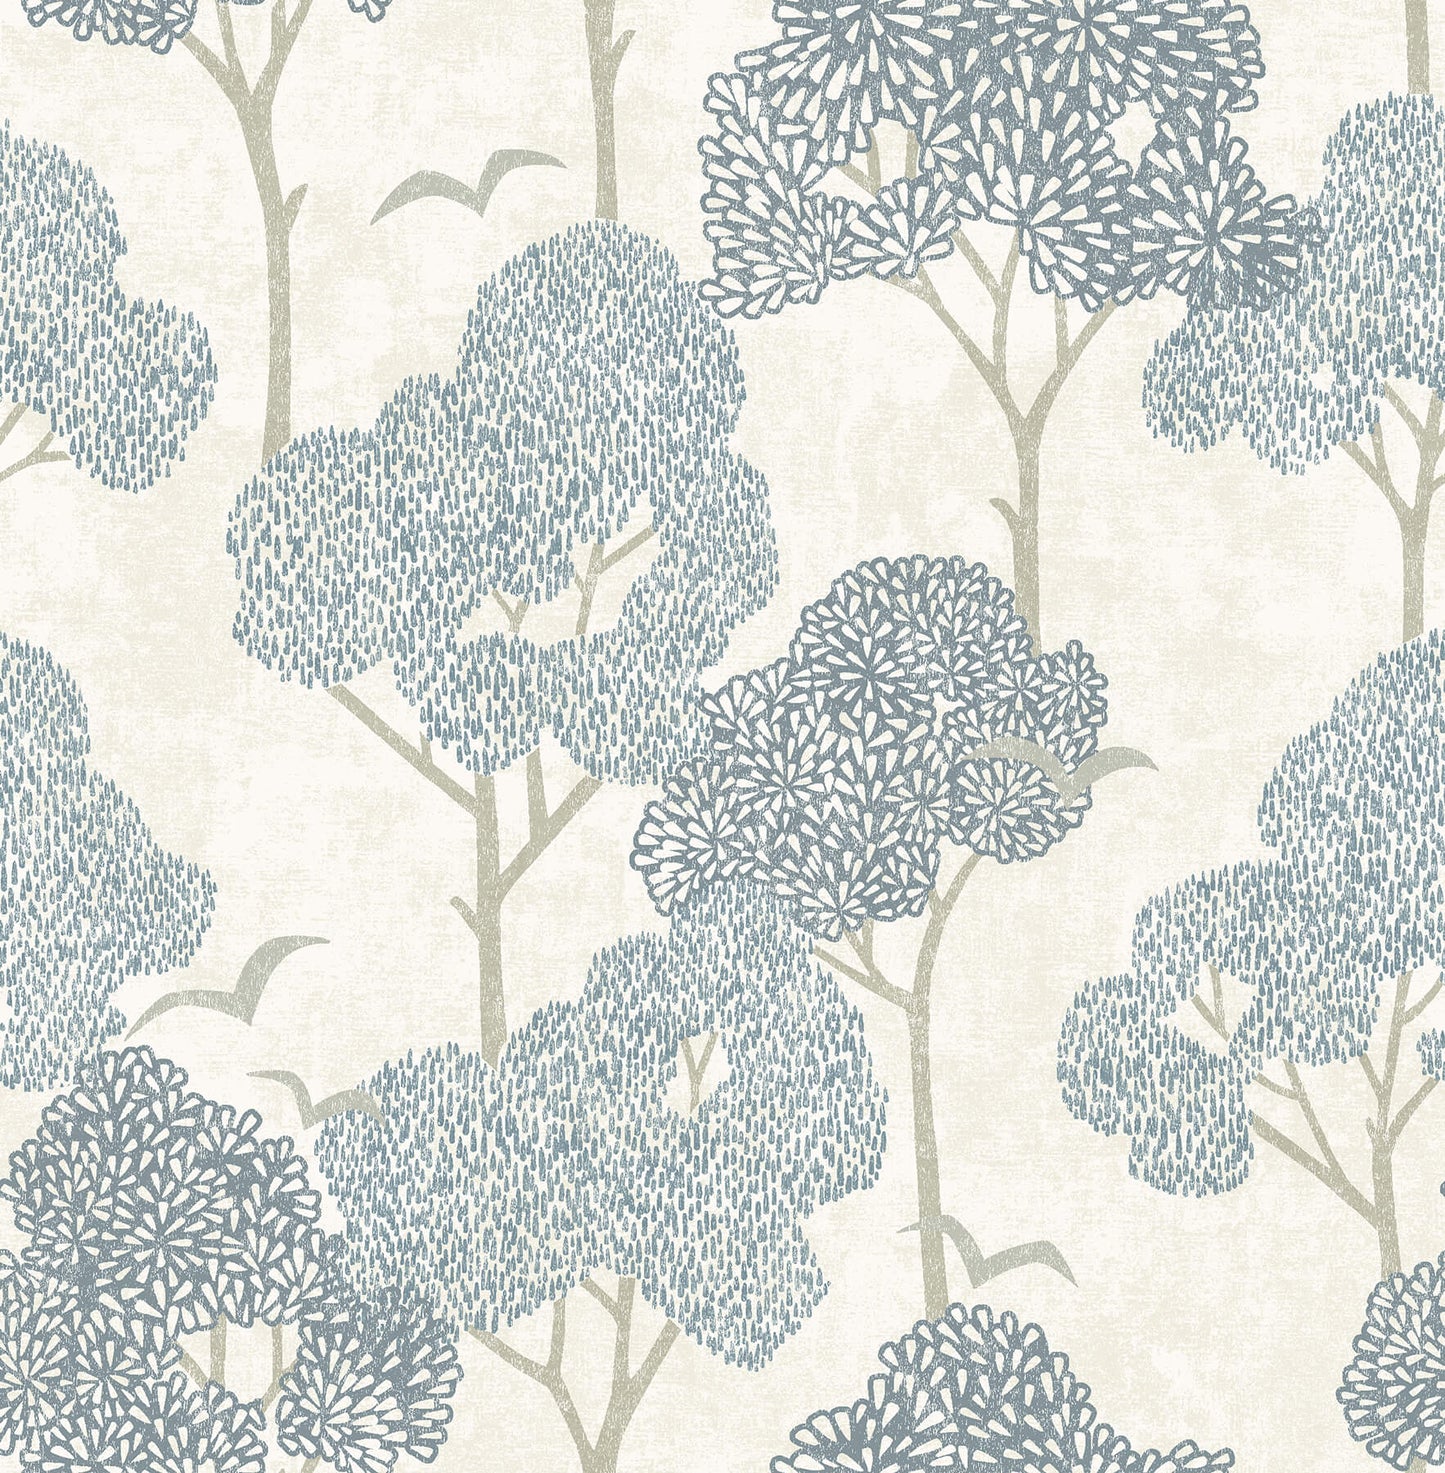 Hannah Lykke Textured Tree Wallpaper - Blue